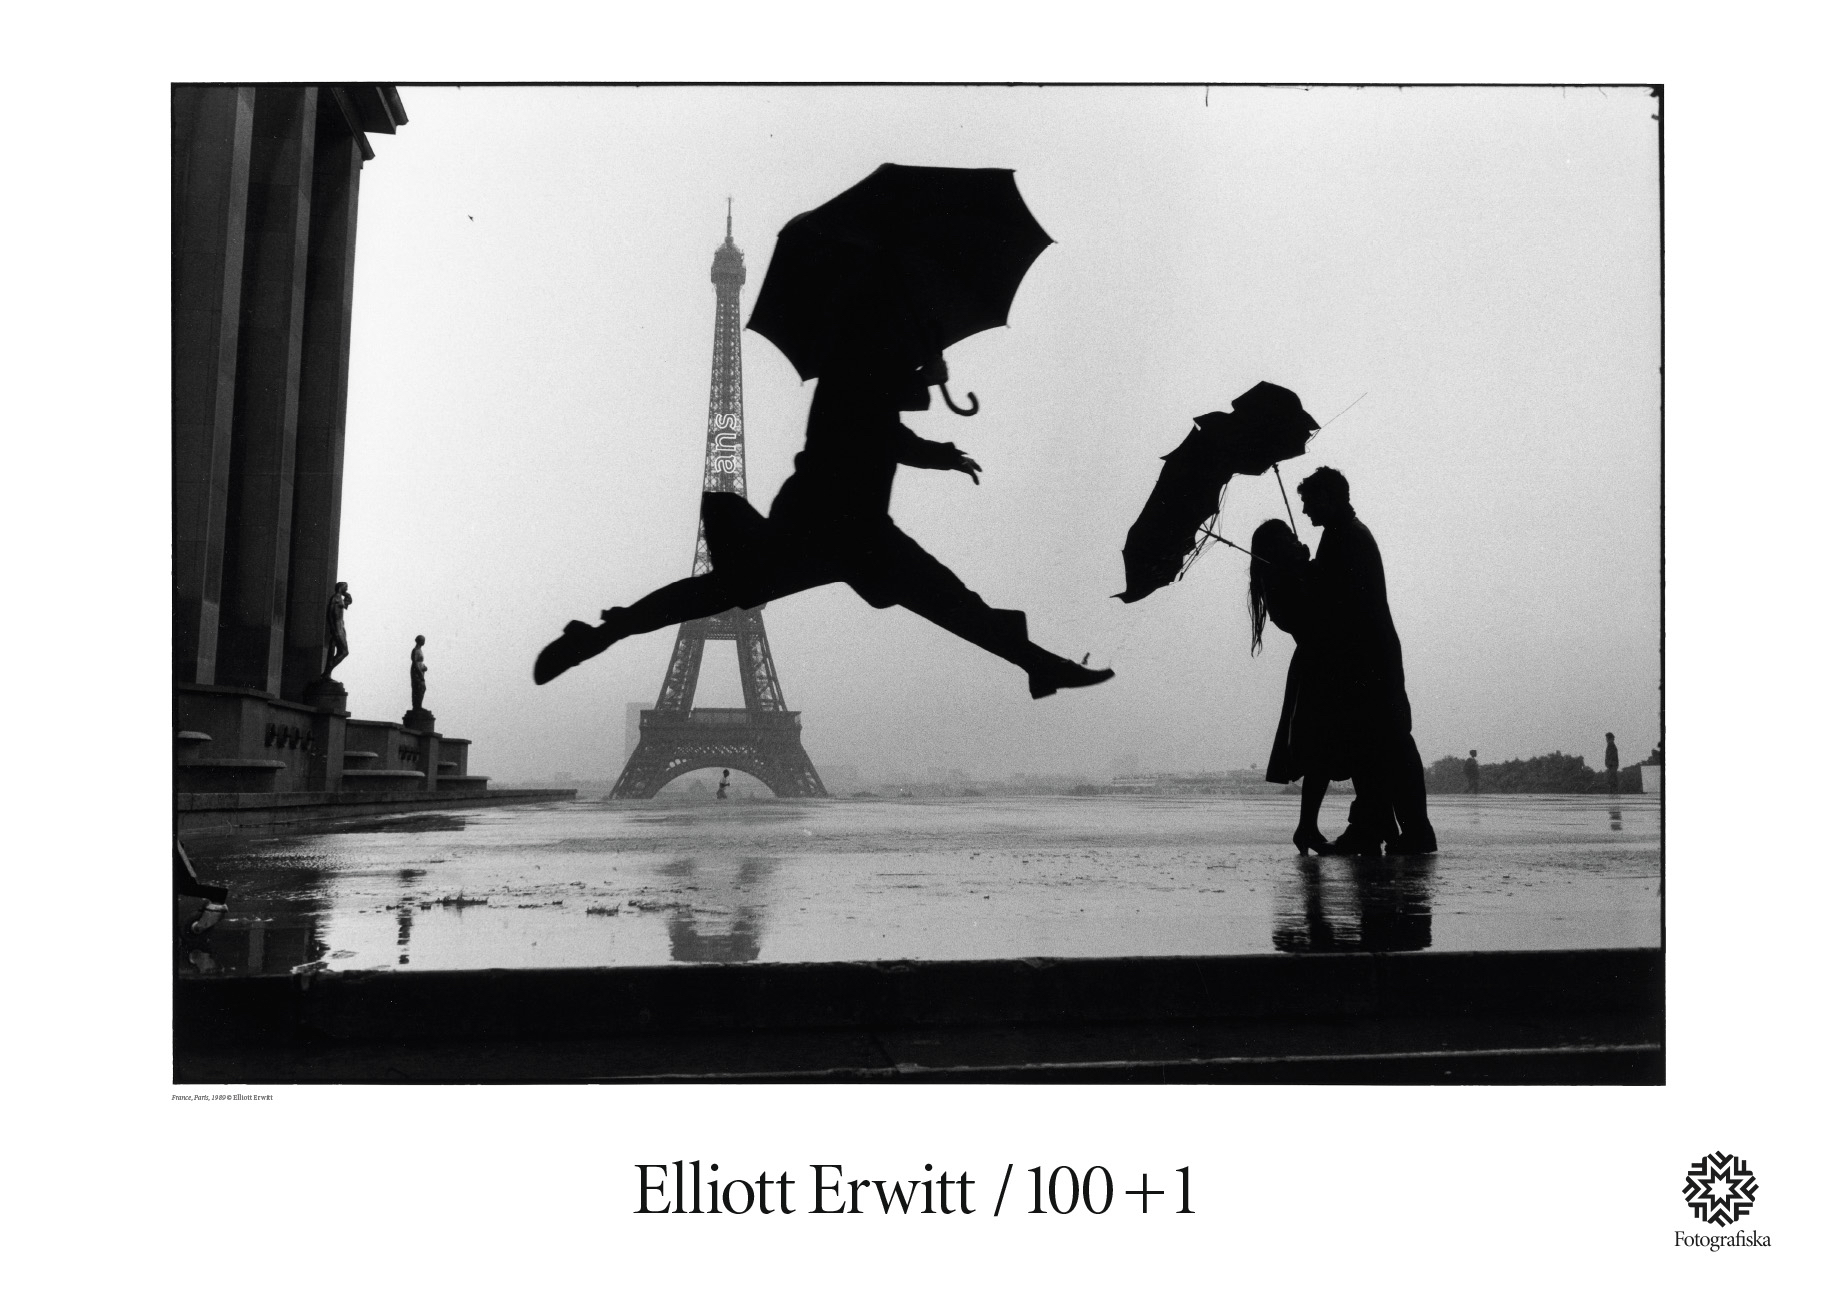 Elliott Erwitt, Umbrella #5780